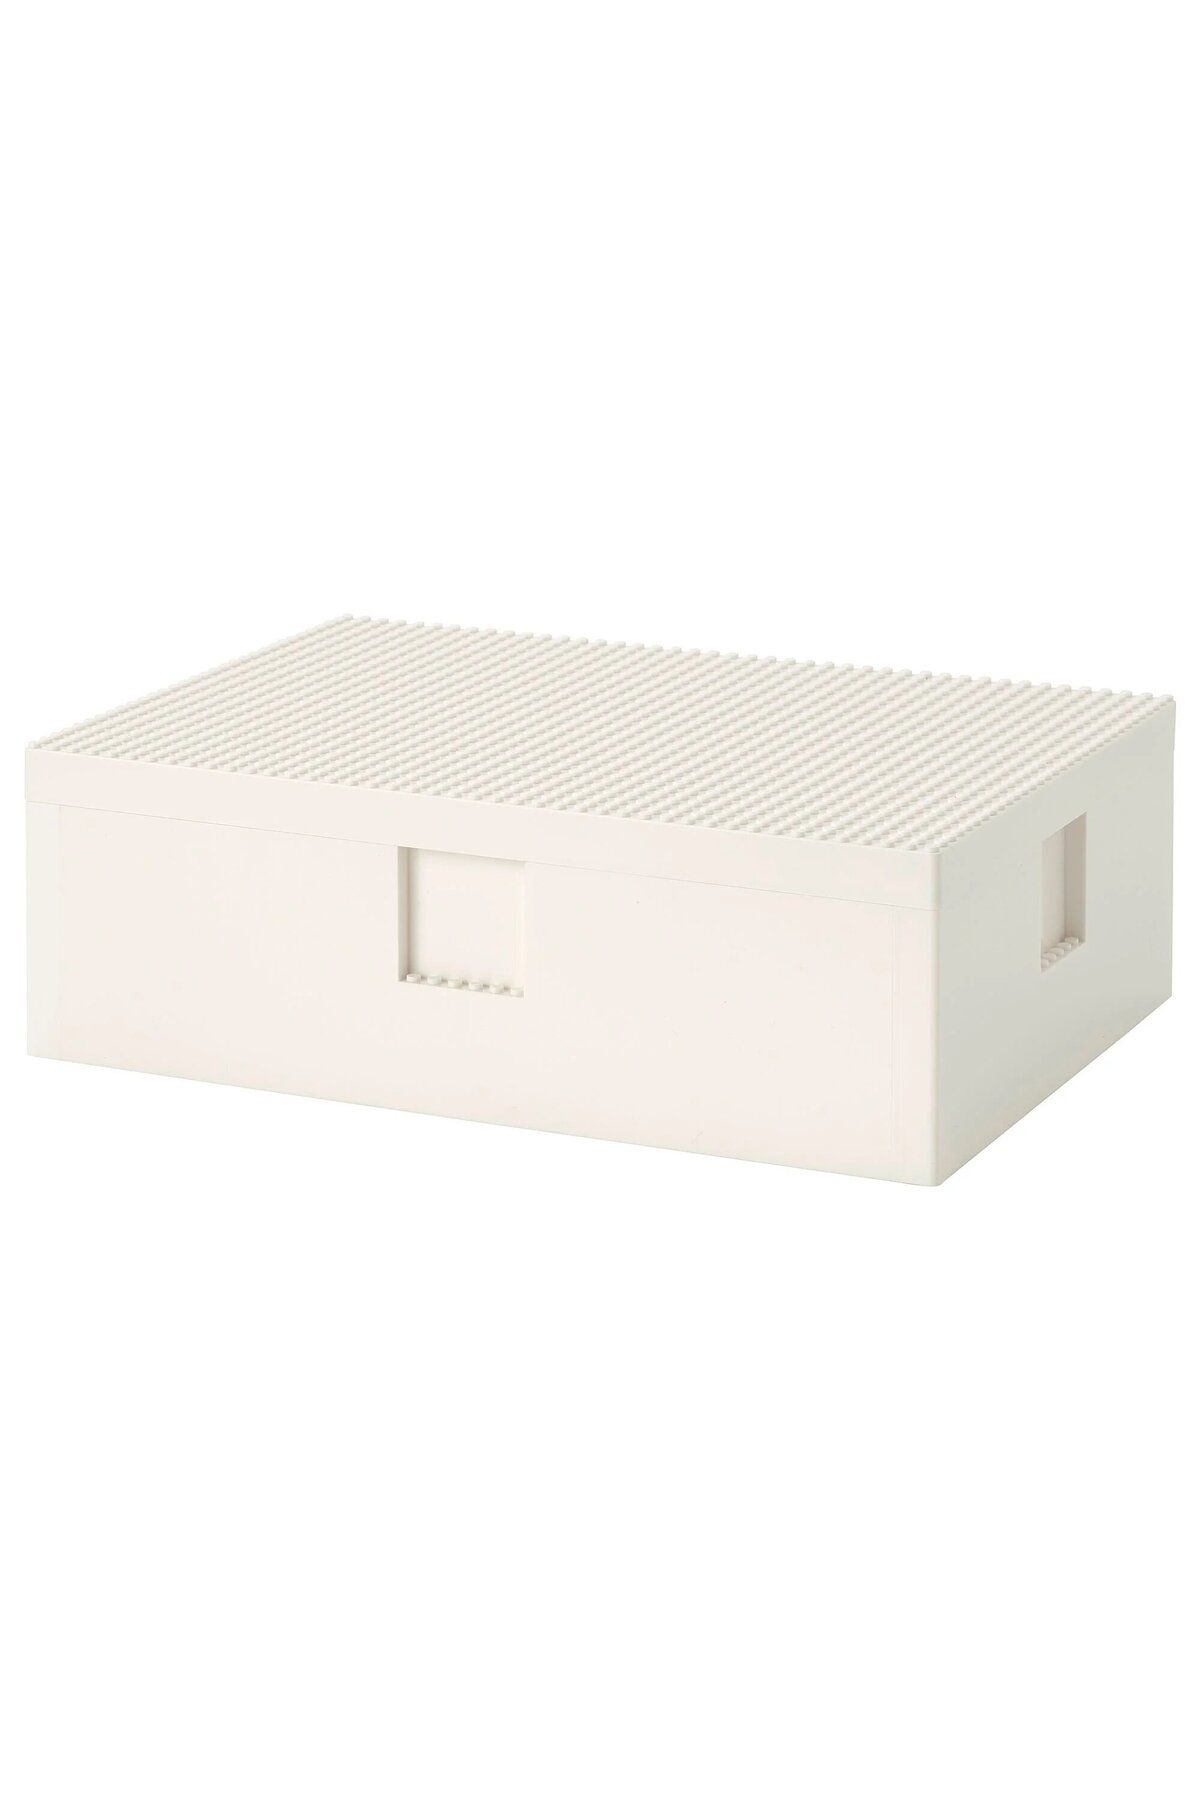 IKEA BYGGLEK kapaklı LEGO® kutusu beyaz 35x26x12 cm